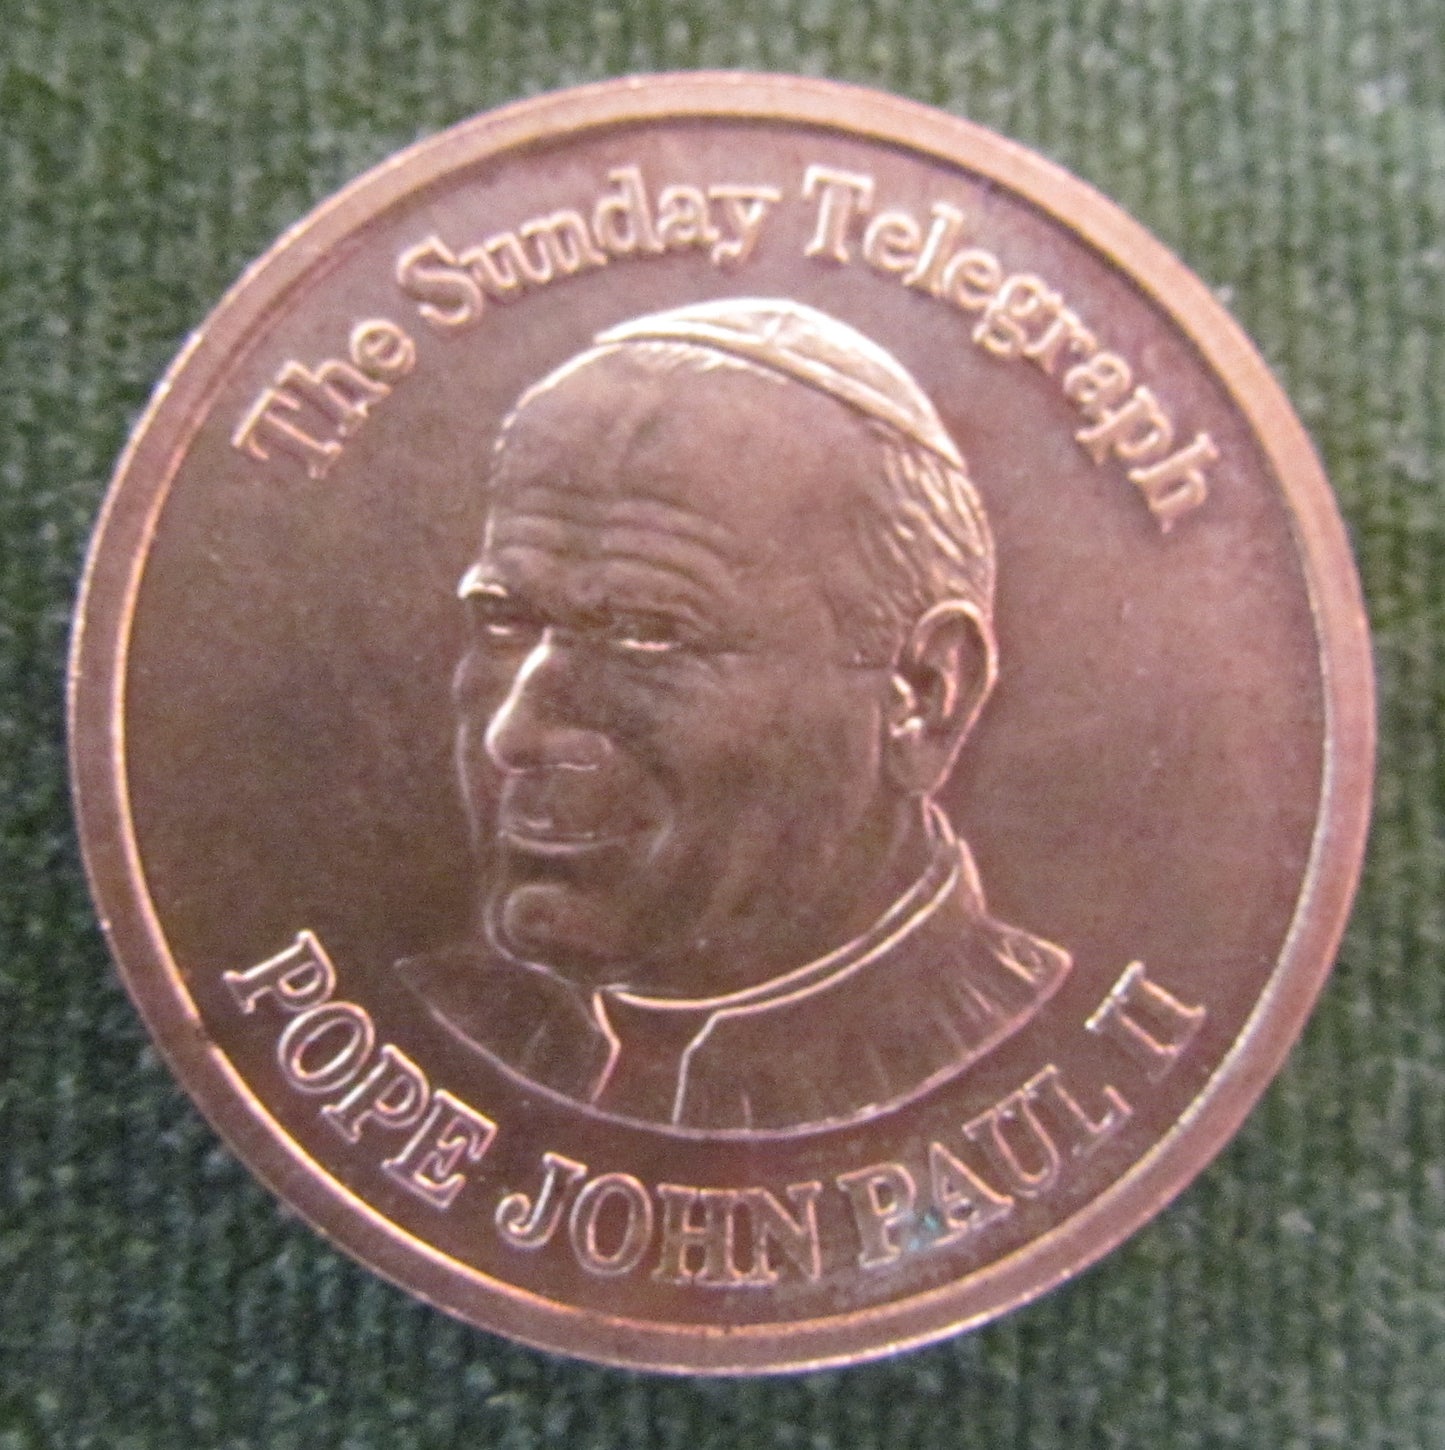 Pope John Paul II & Mary MacKillop Medallion 1995 - Sunday Telegraph